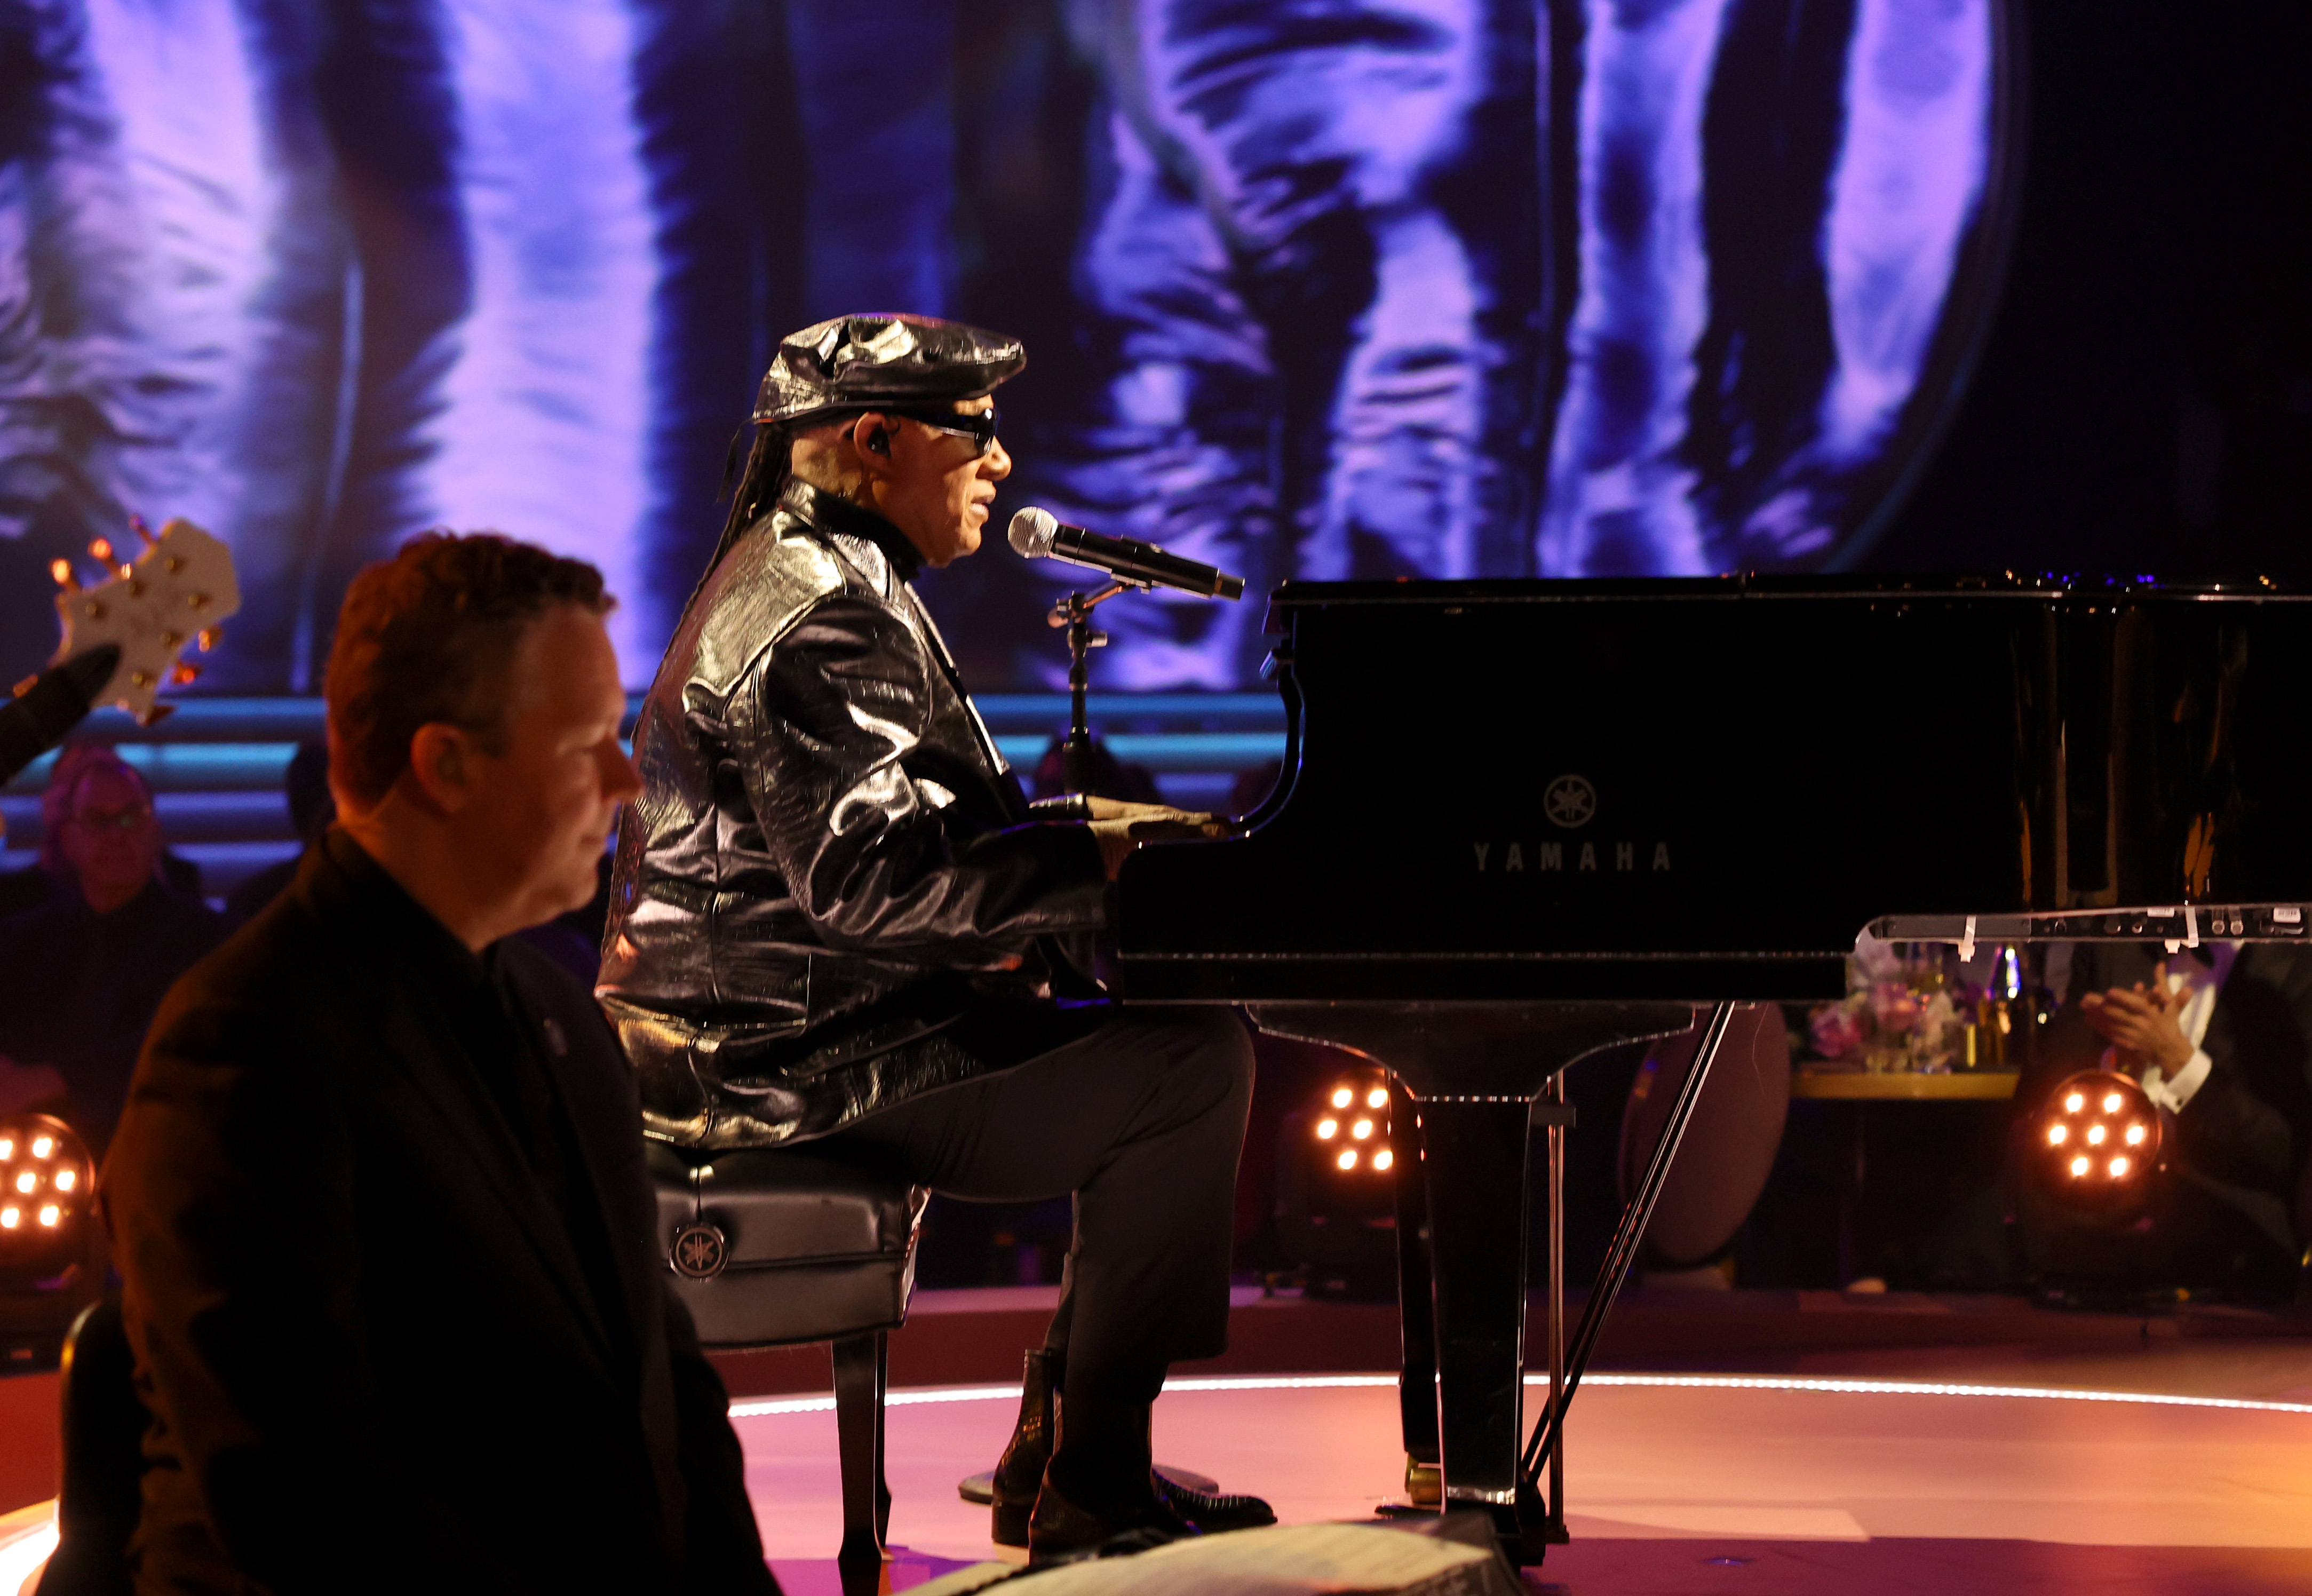 Stevie Wonder sang during the segment